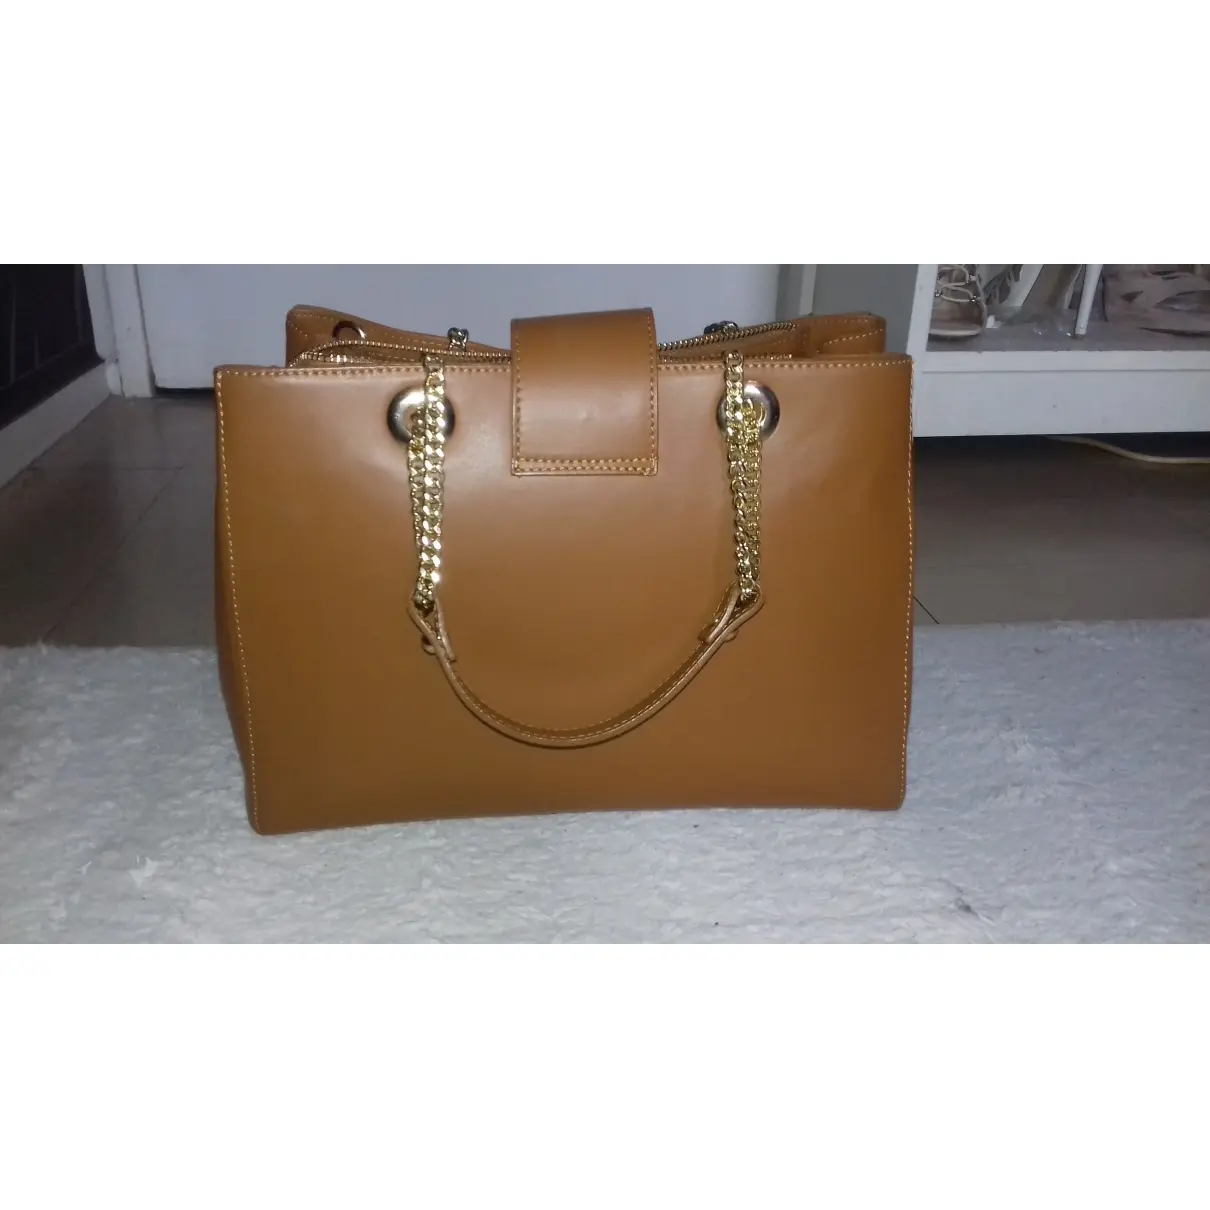 Pierre Cardin Leather handbag for sale